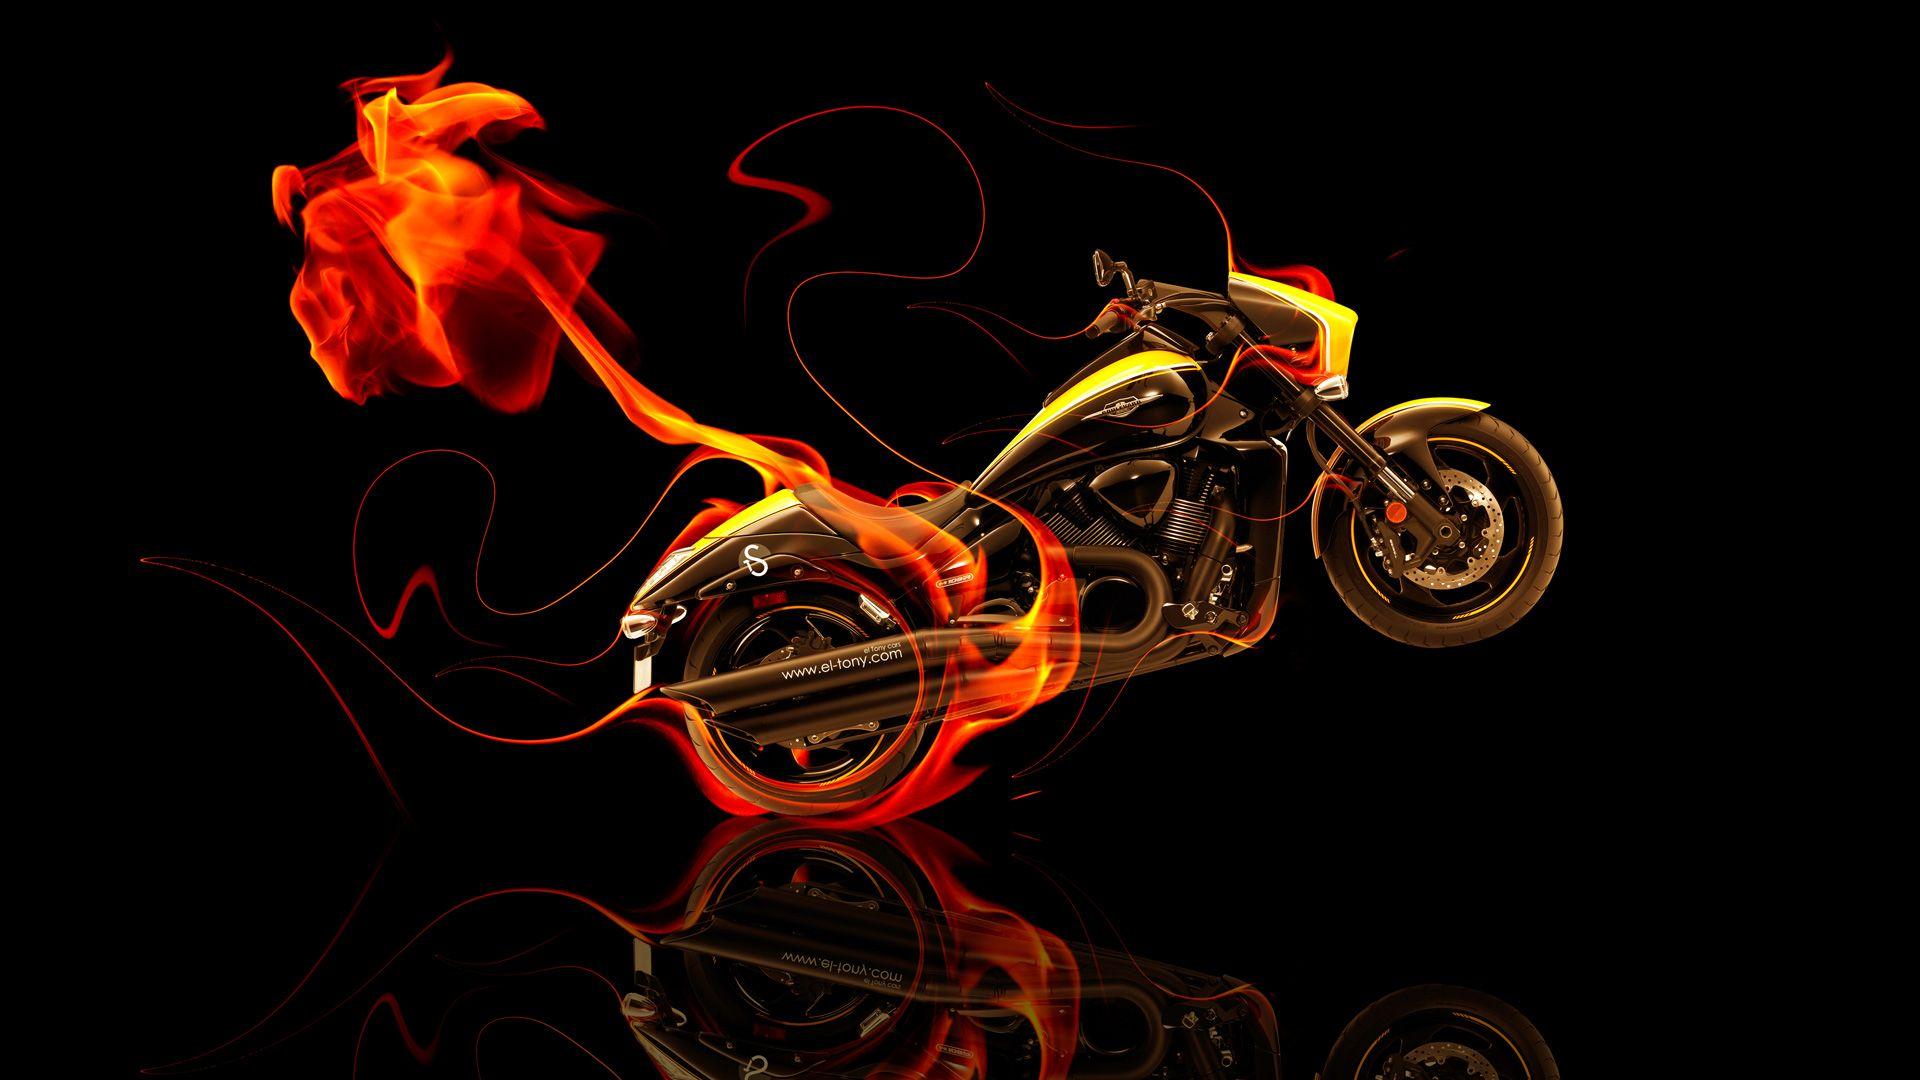 Moto Suzuki M109 Side Fire Abstract Bike 2014 HD Wallpaper Design